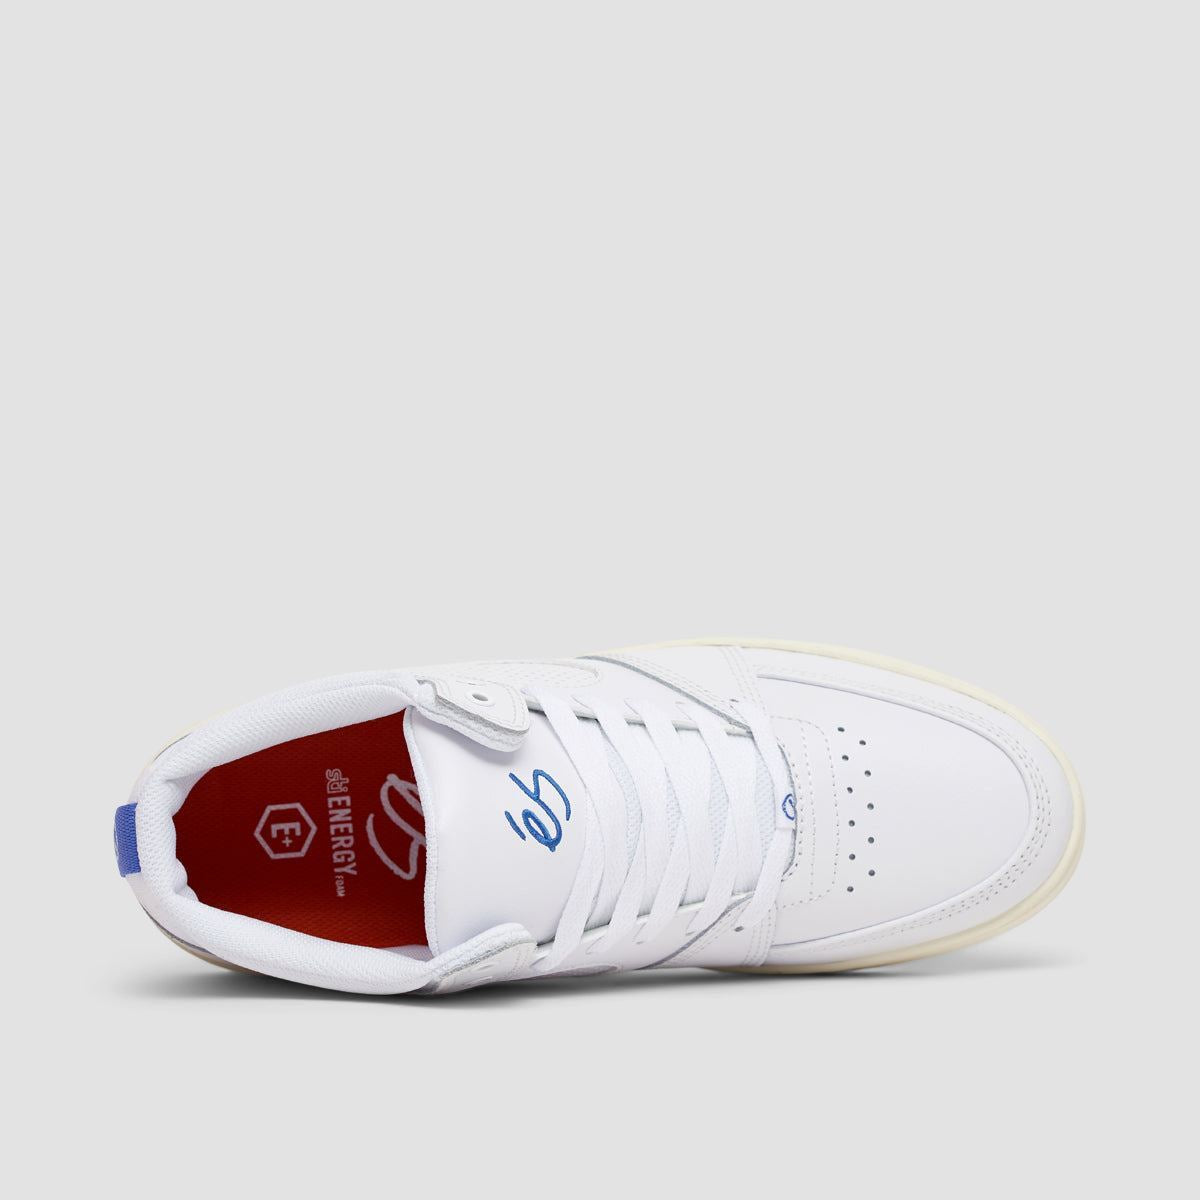 eS Accel Slim Mid Shoes - White/Tan